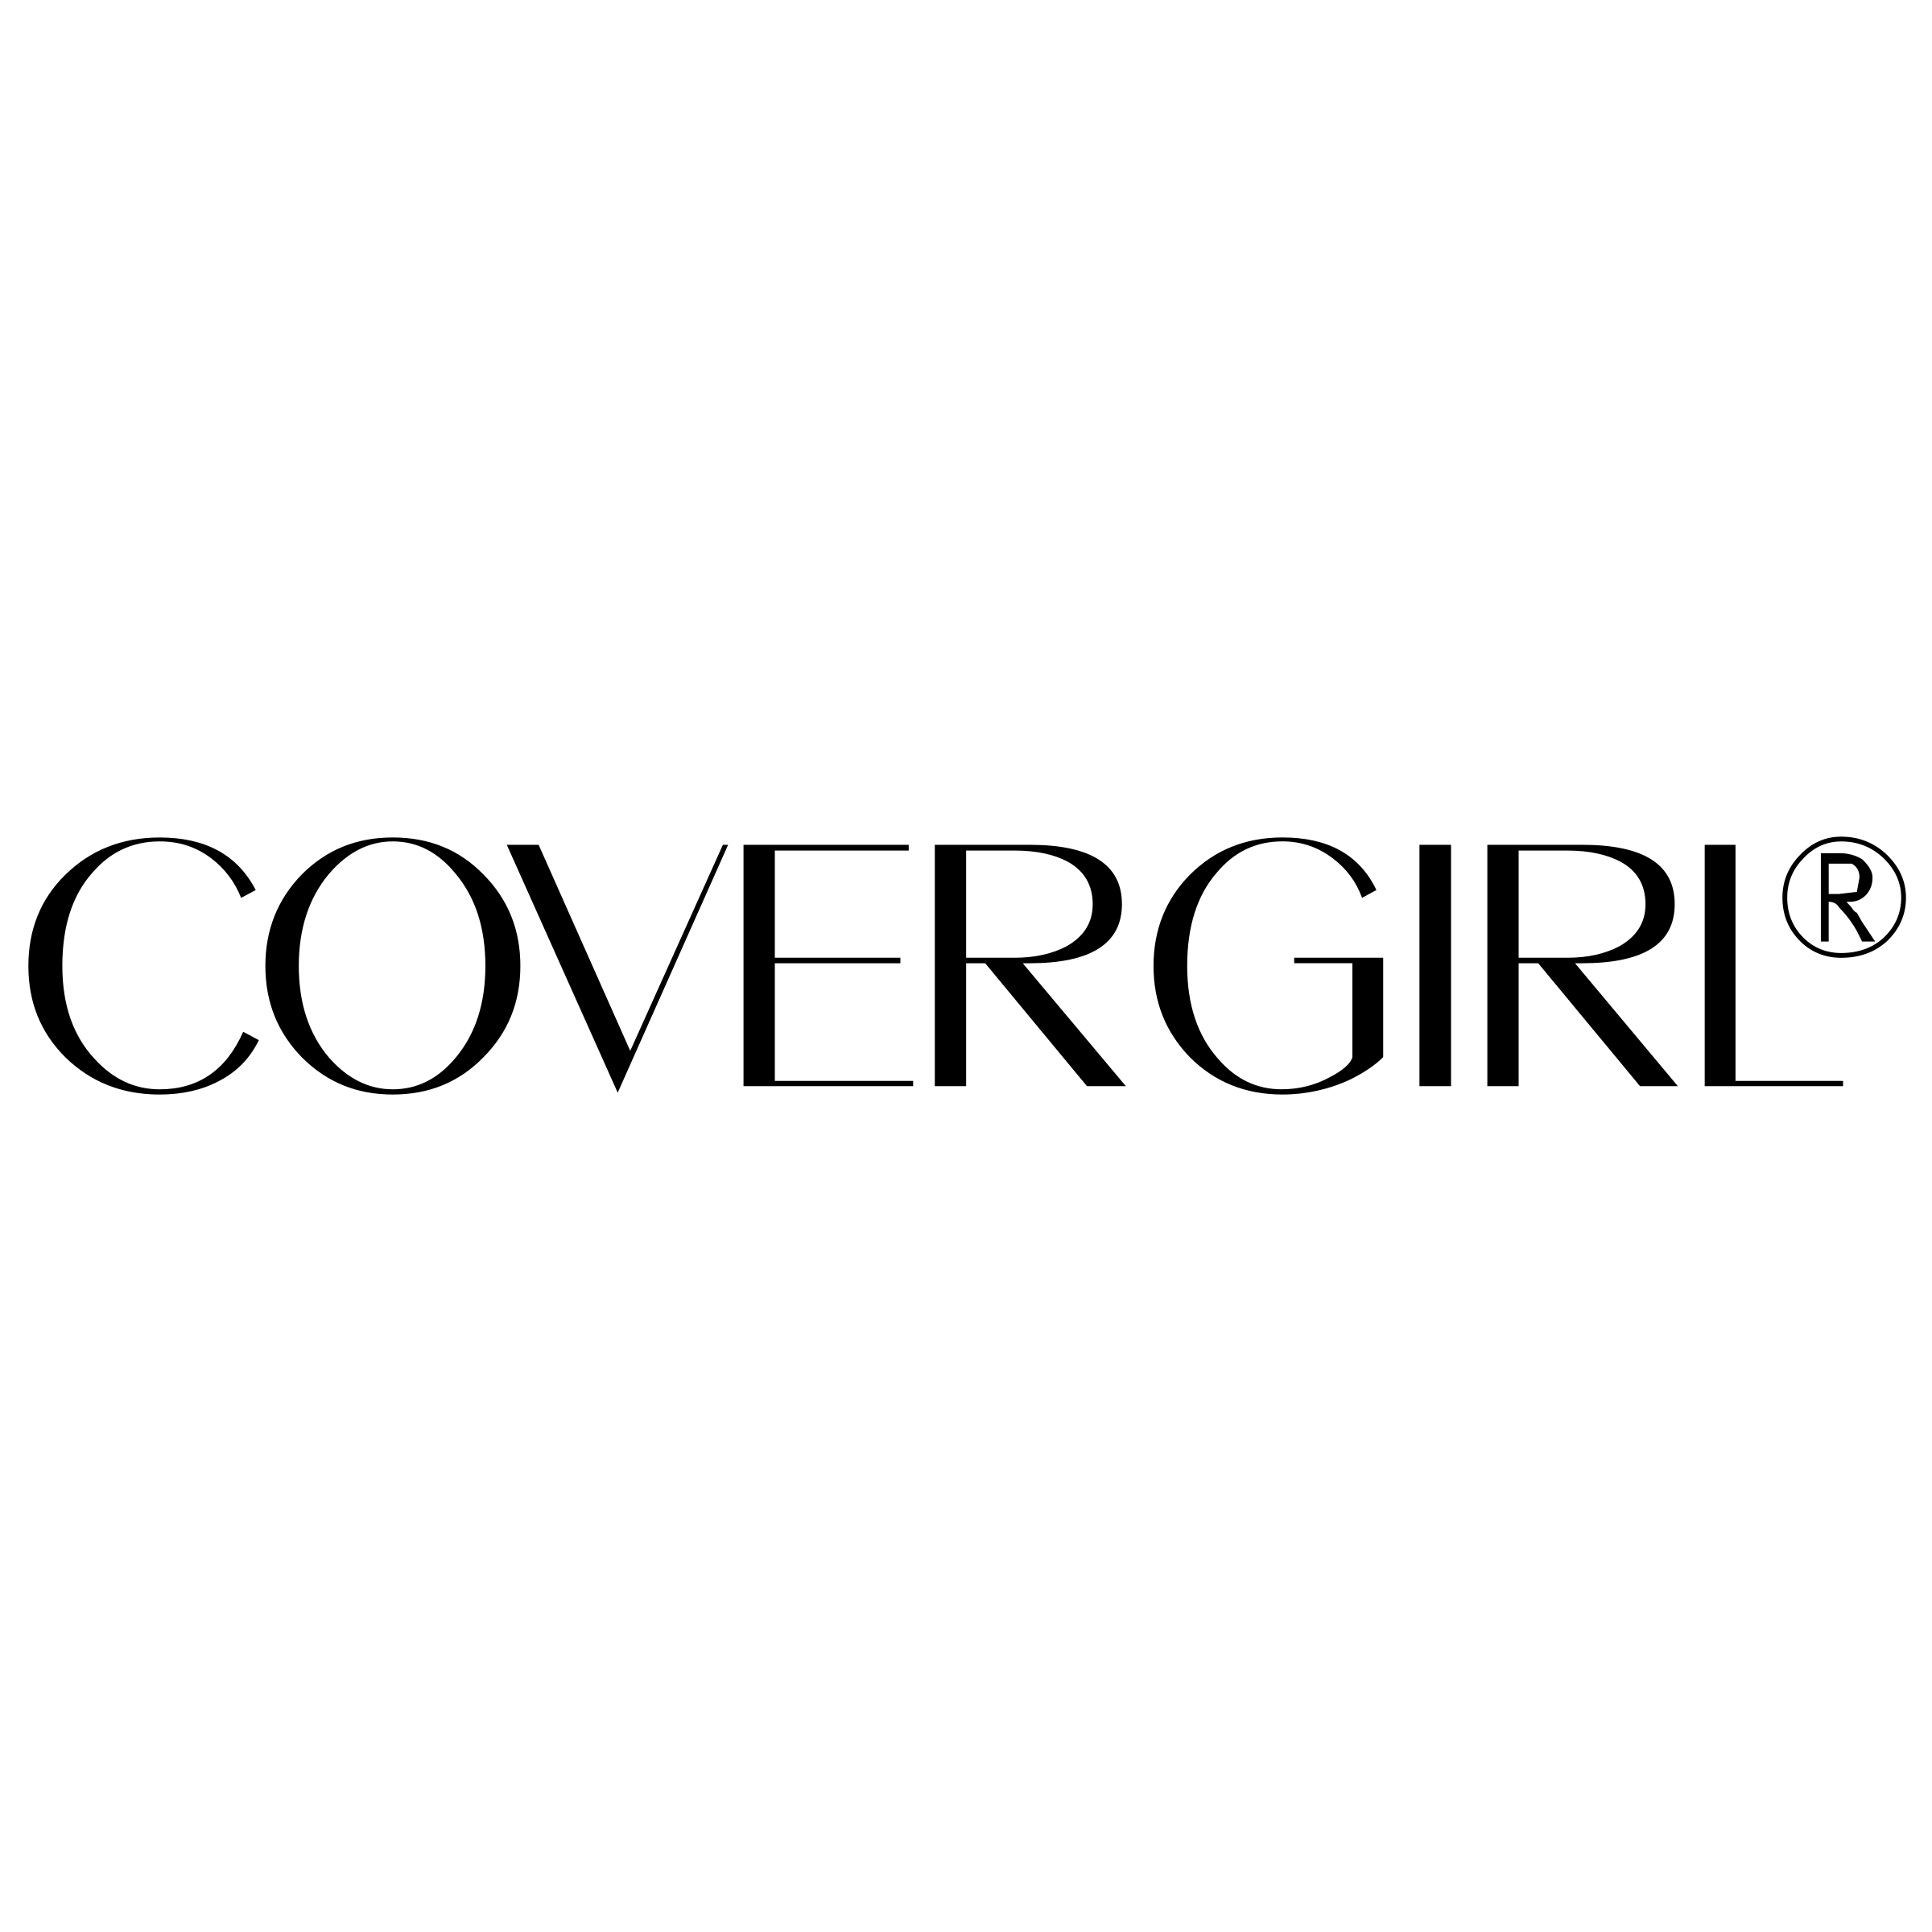 Covergirl Logo - Covergirl Logo PNG Transparent & SVG Vector - Freebie Supply